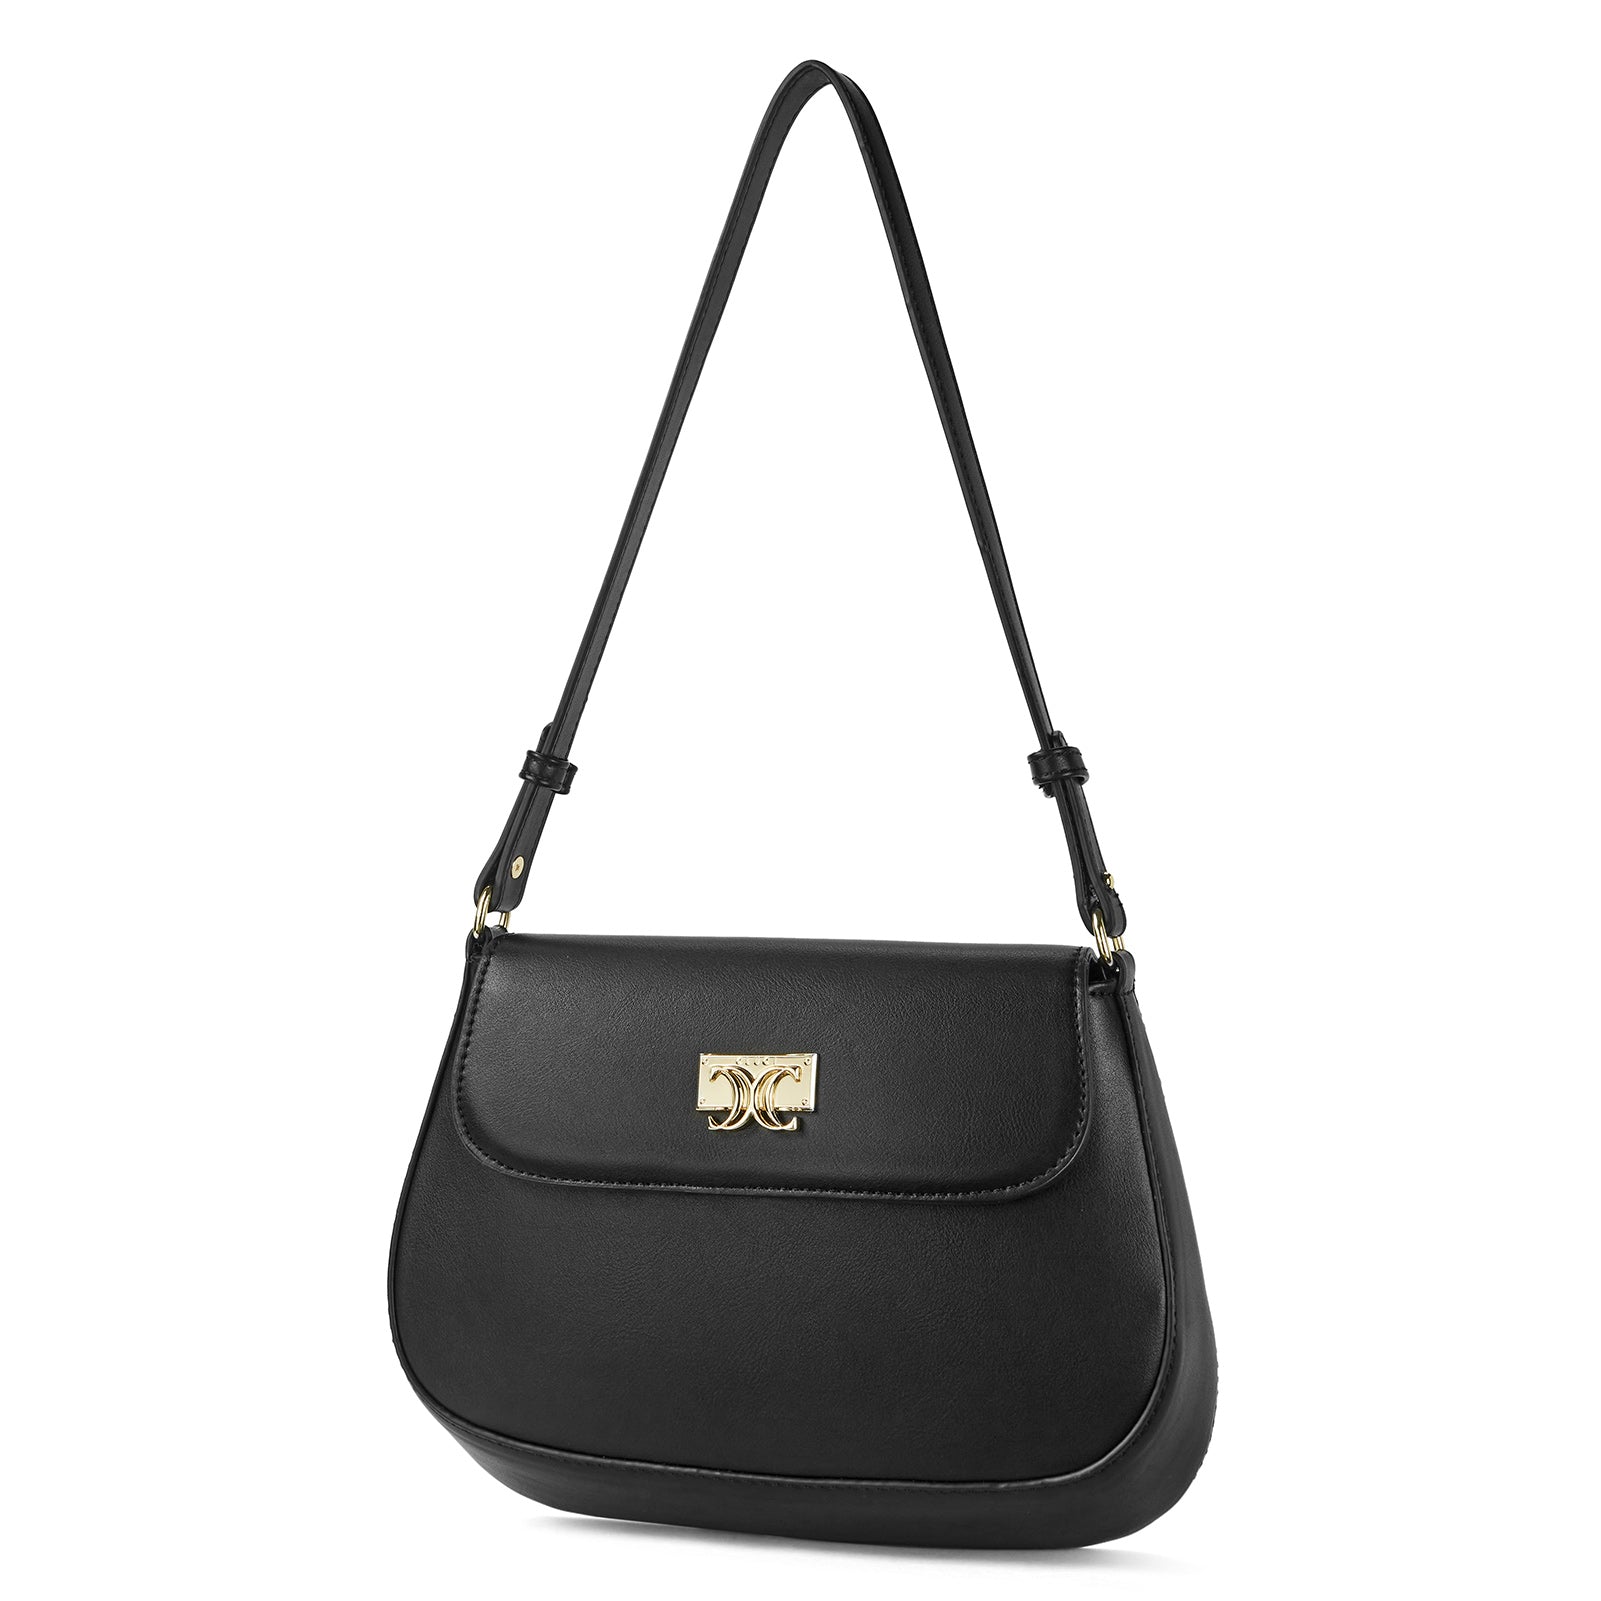 Black Diamond Stitched Purse | Trending handbag, Purses, Black leather purse